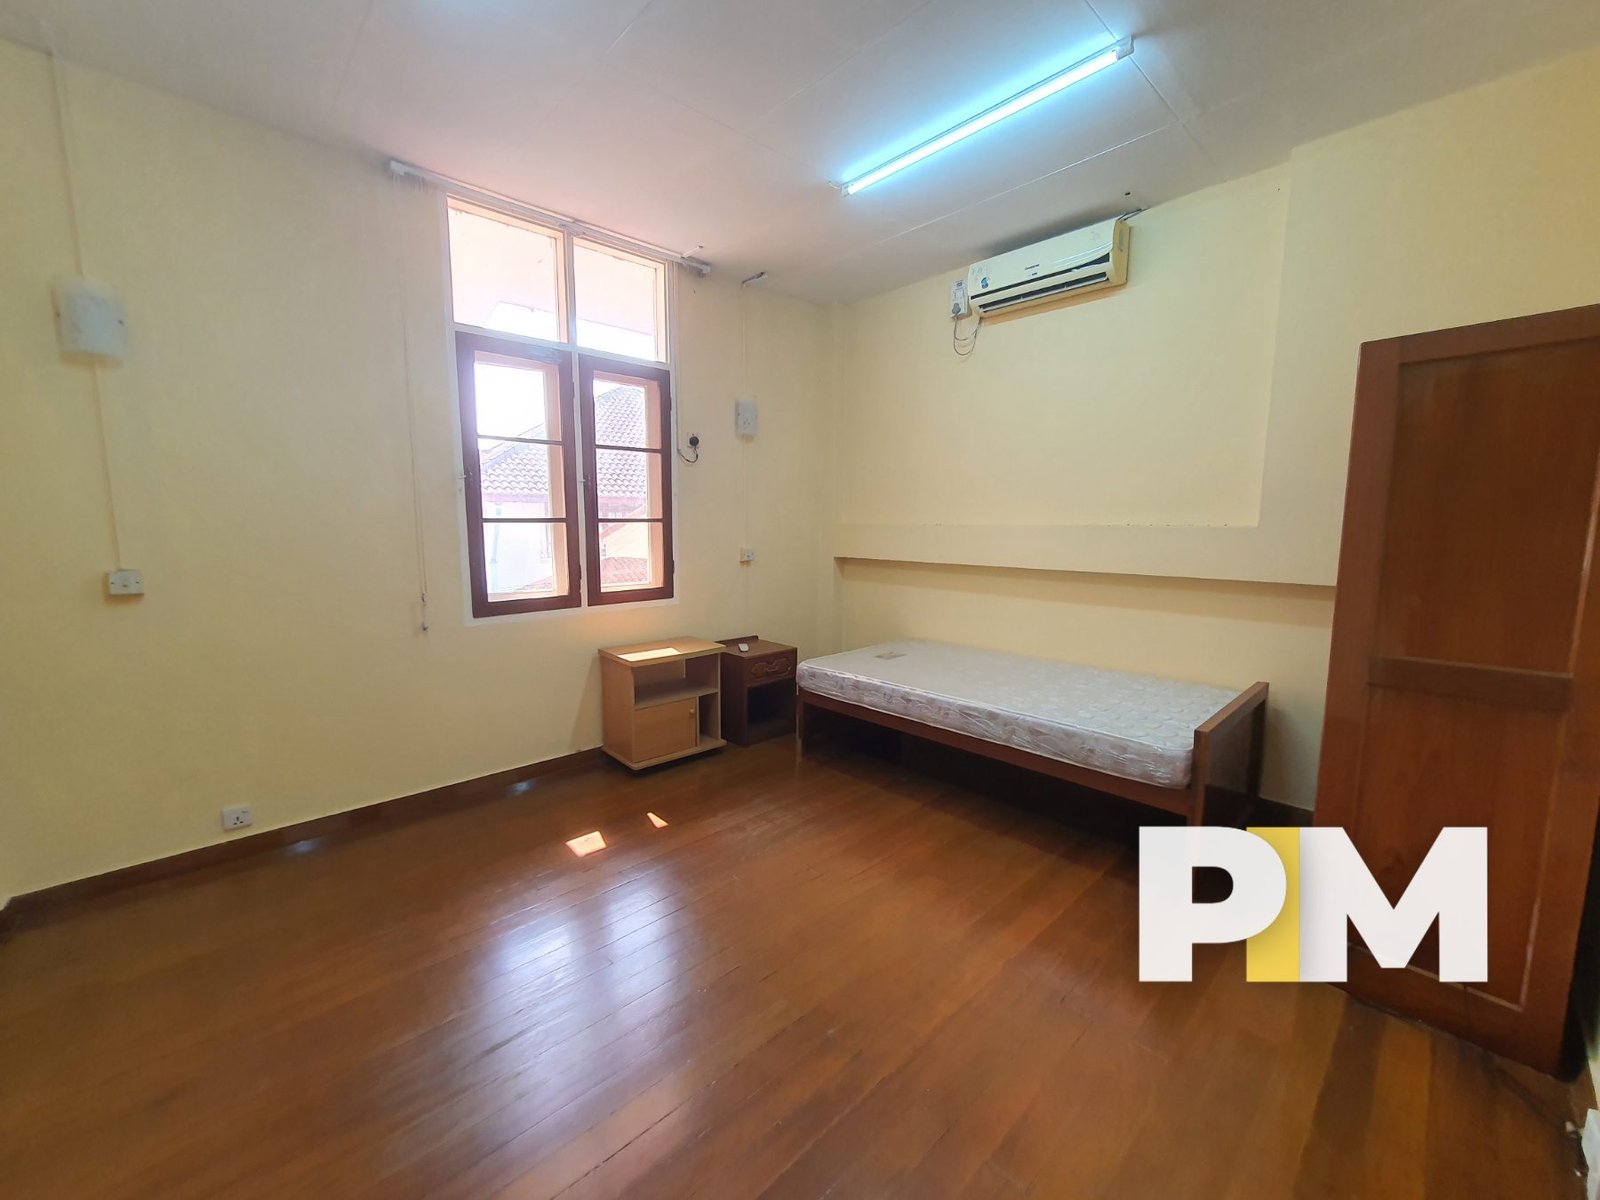 One single bedroom - Yangon Real Estate